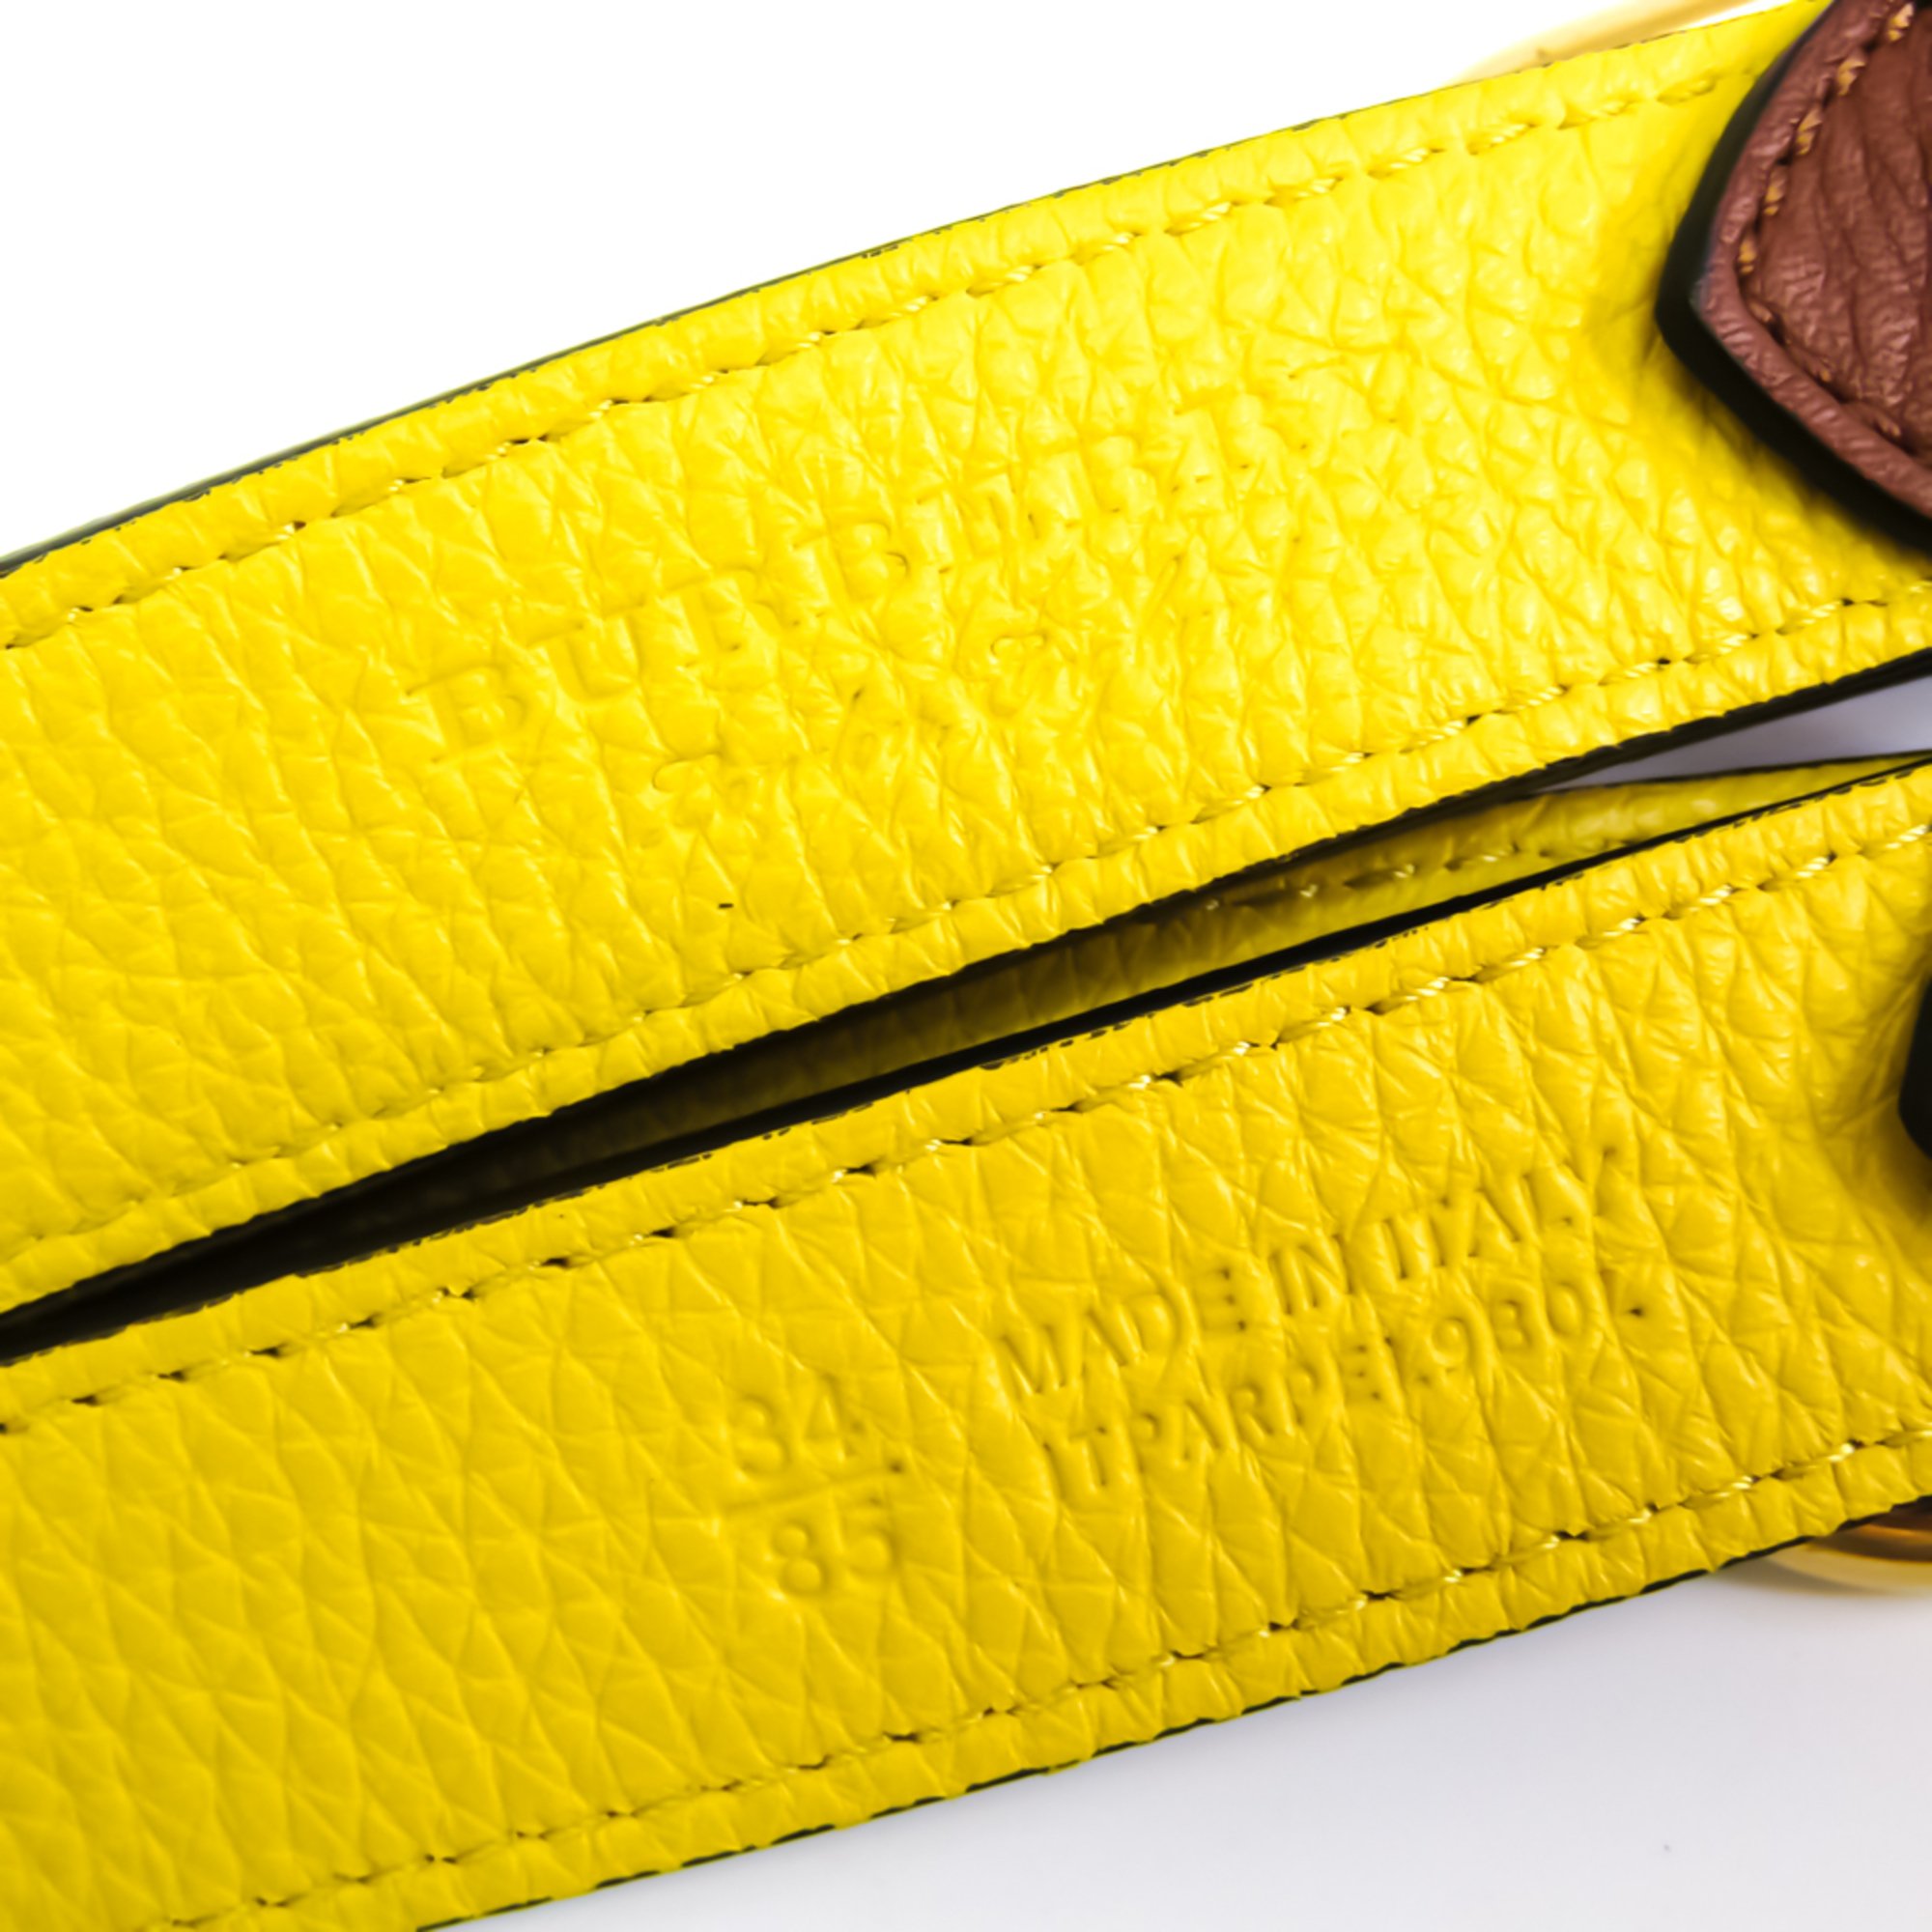 Burberry Men's Leather Standard Belt Brown,Yellow 85